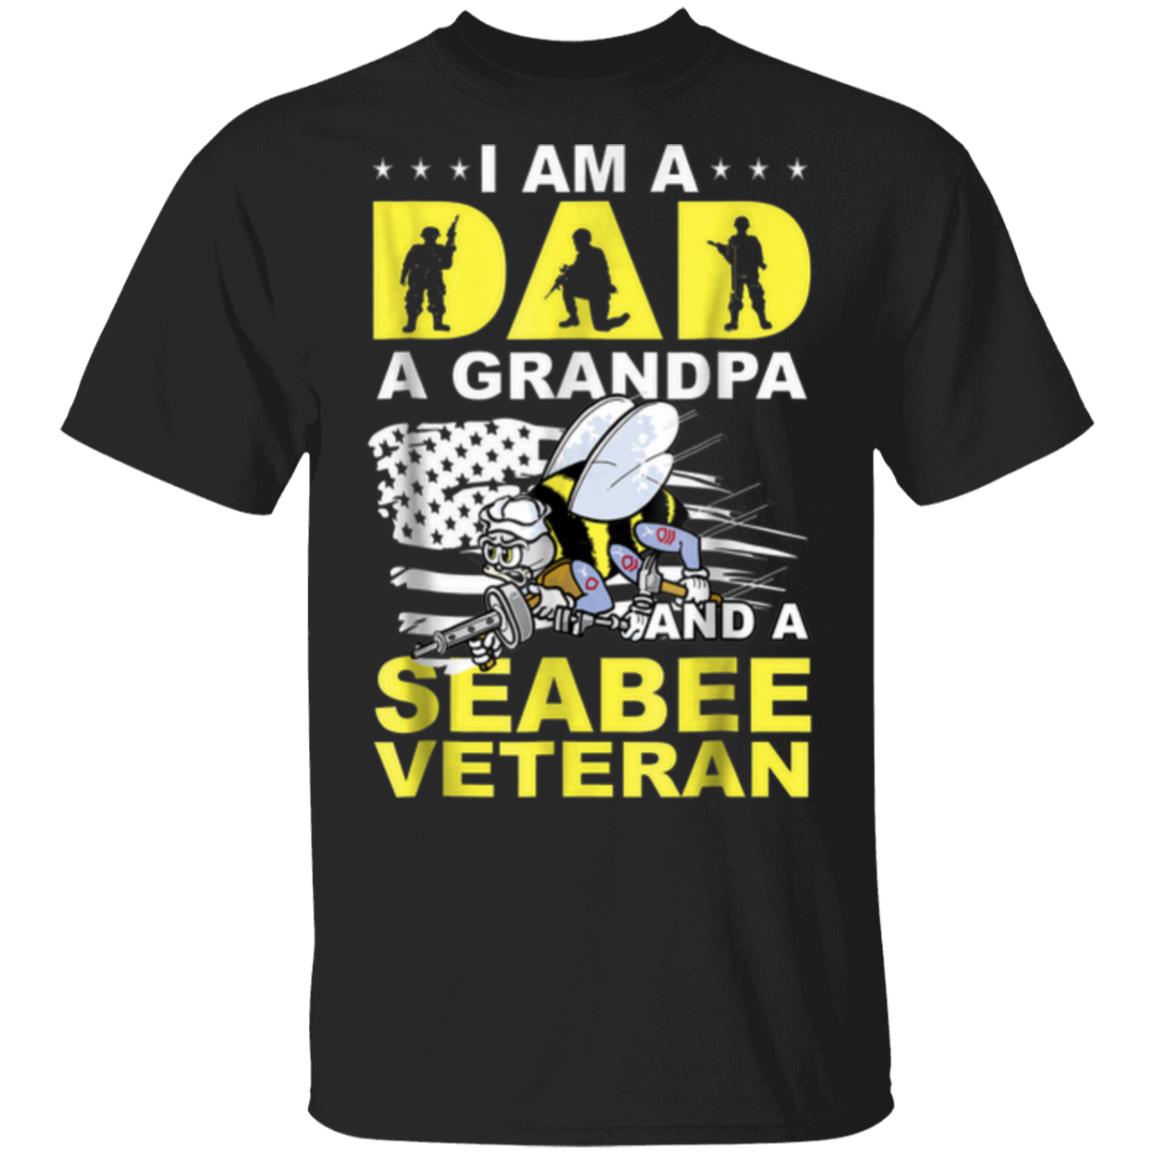 Bee I am a Dad a Grandpa and a Seabee Veteran shirt